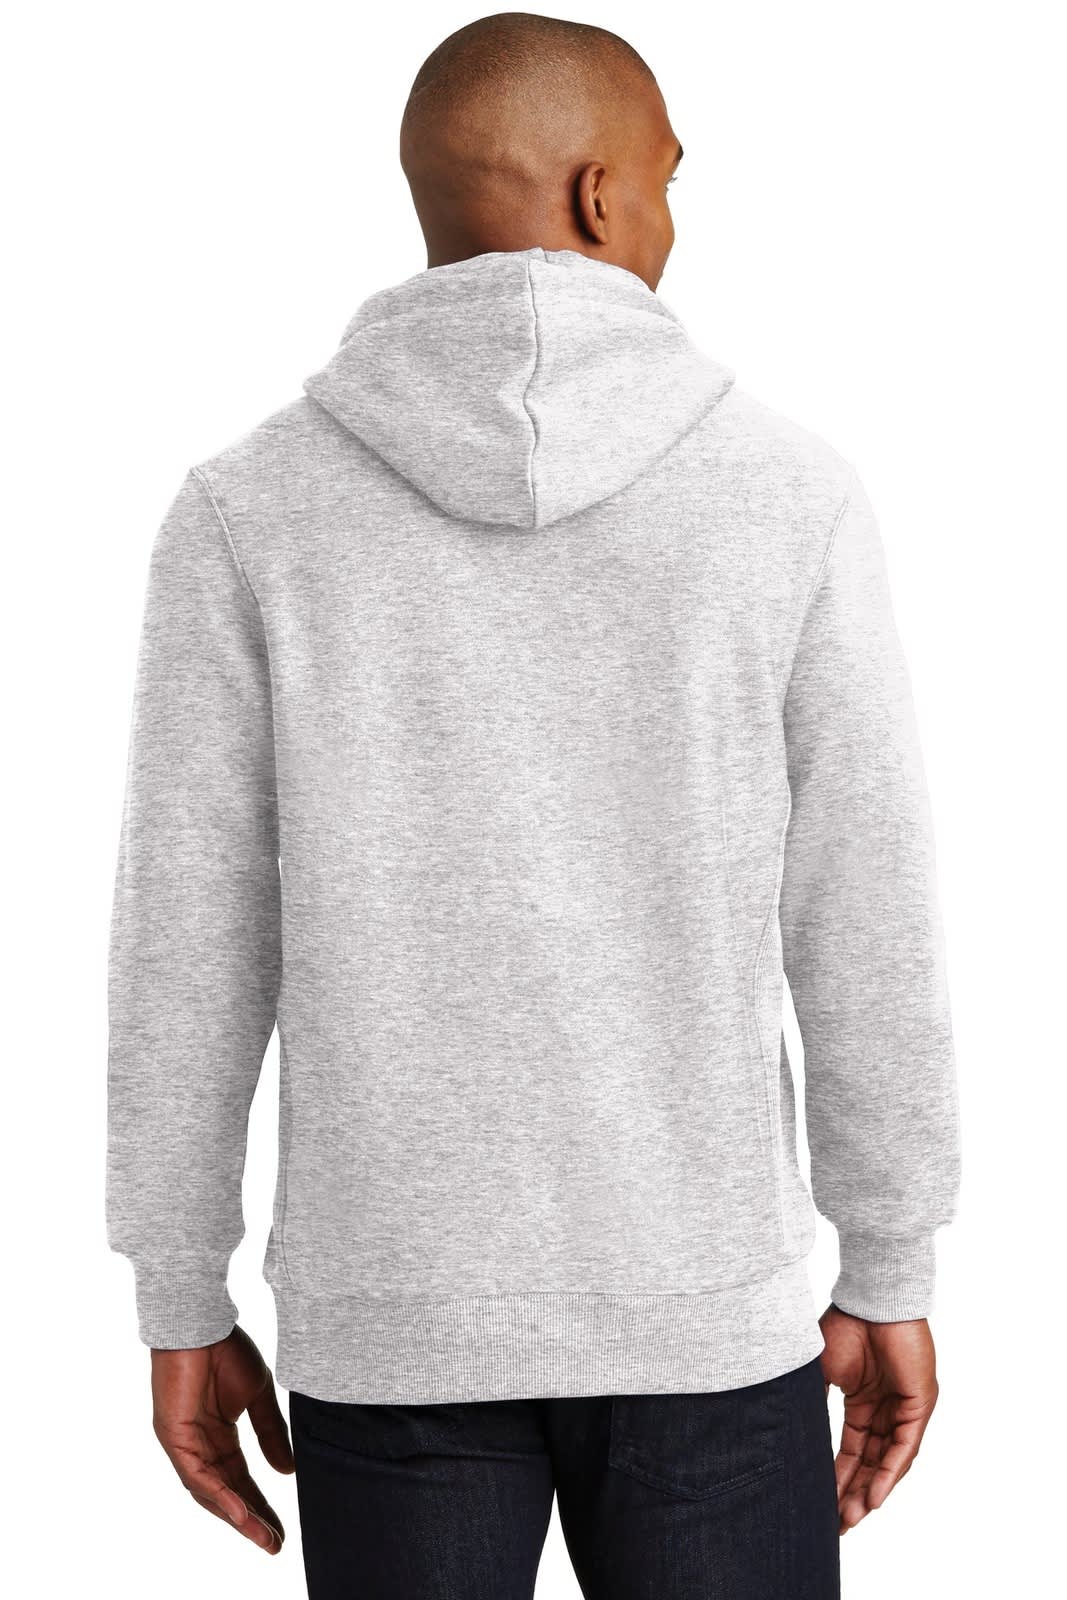 Sport-Tek Super Heavyweight Pullover Hooded Sweatshirt | The Branding ...